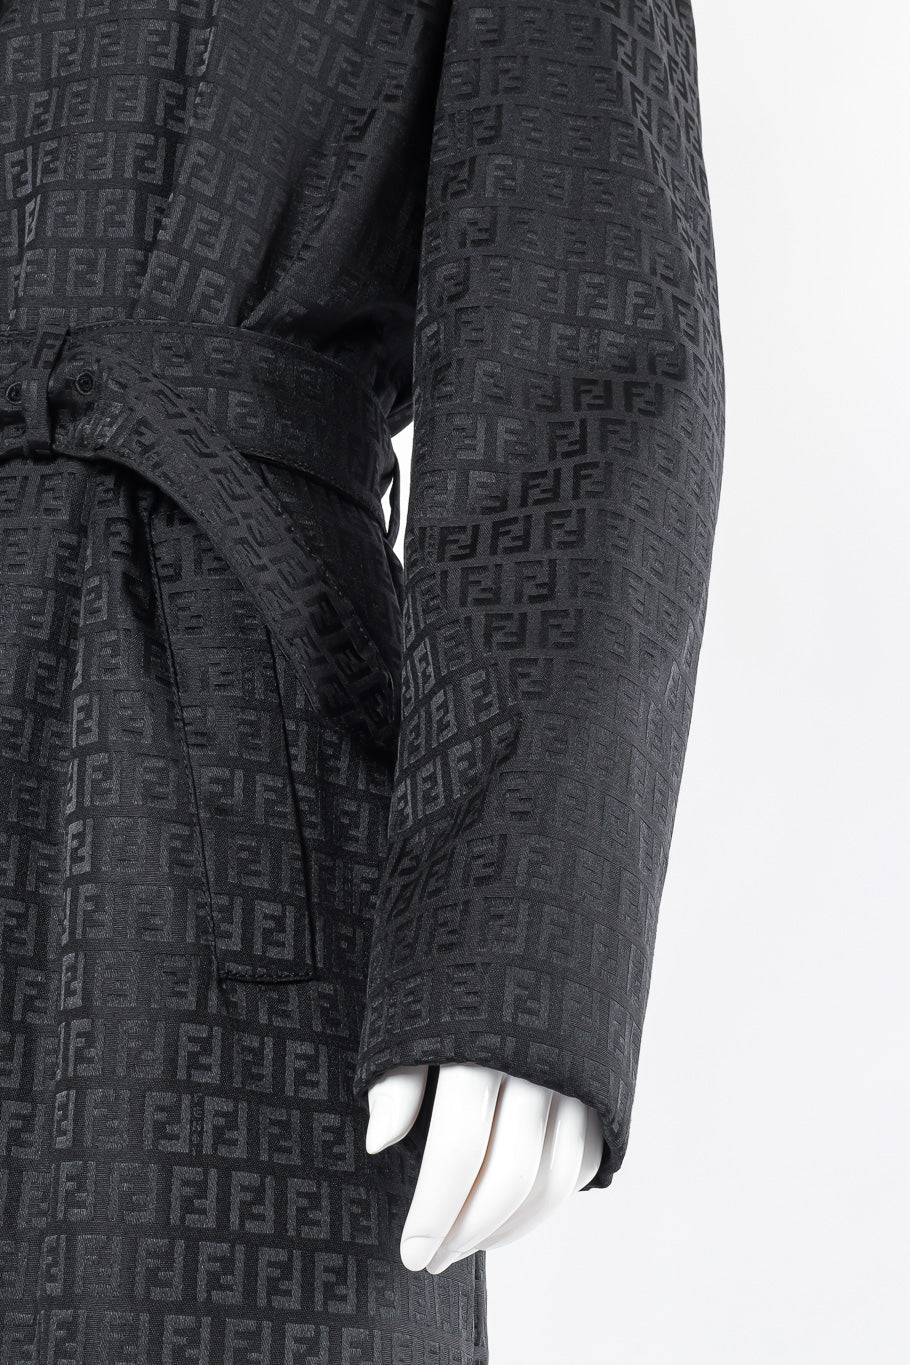 Fendi zucca monogram trench coat on mannequin @recessla